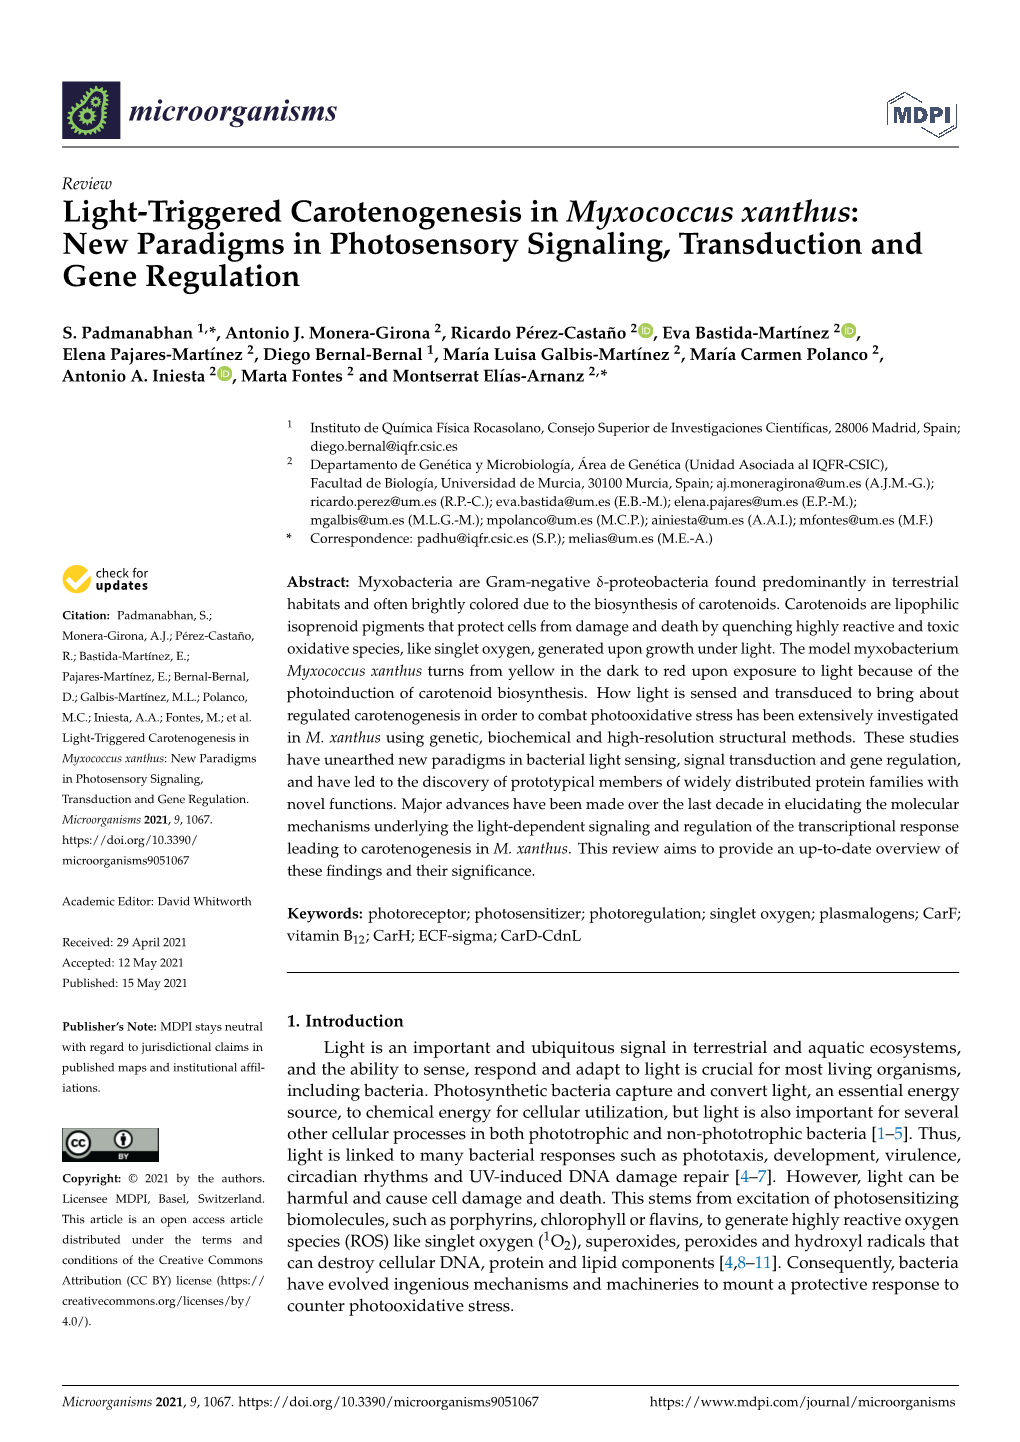 Light-Triggered Carotenogenesis in Myxococcus Xanthus: New Paradigms in Photosensory Signaling, Transduction and Gene Regulation